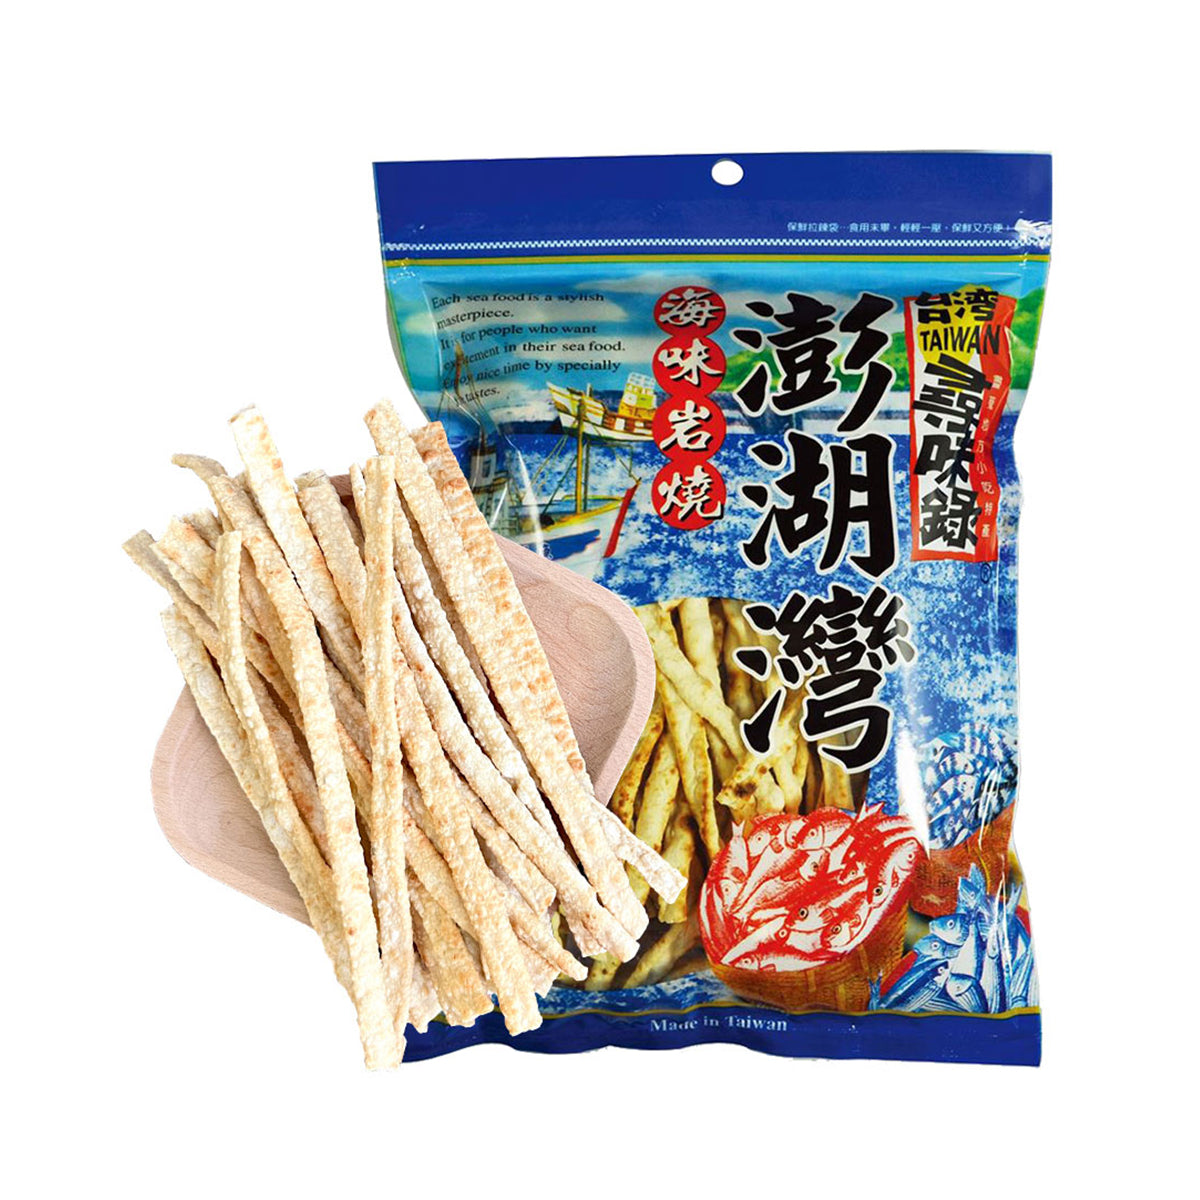 【TAIWAN SYUN WEI LU FOOD】 Slice Fish Snack 80g